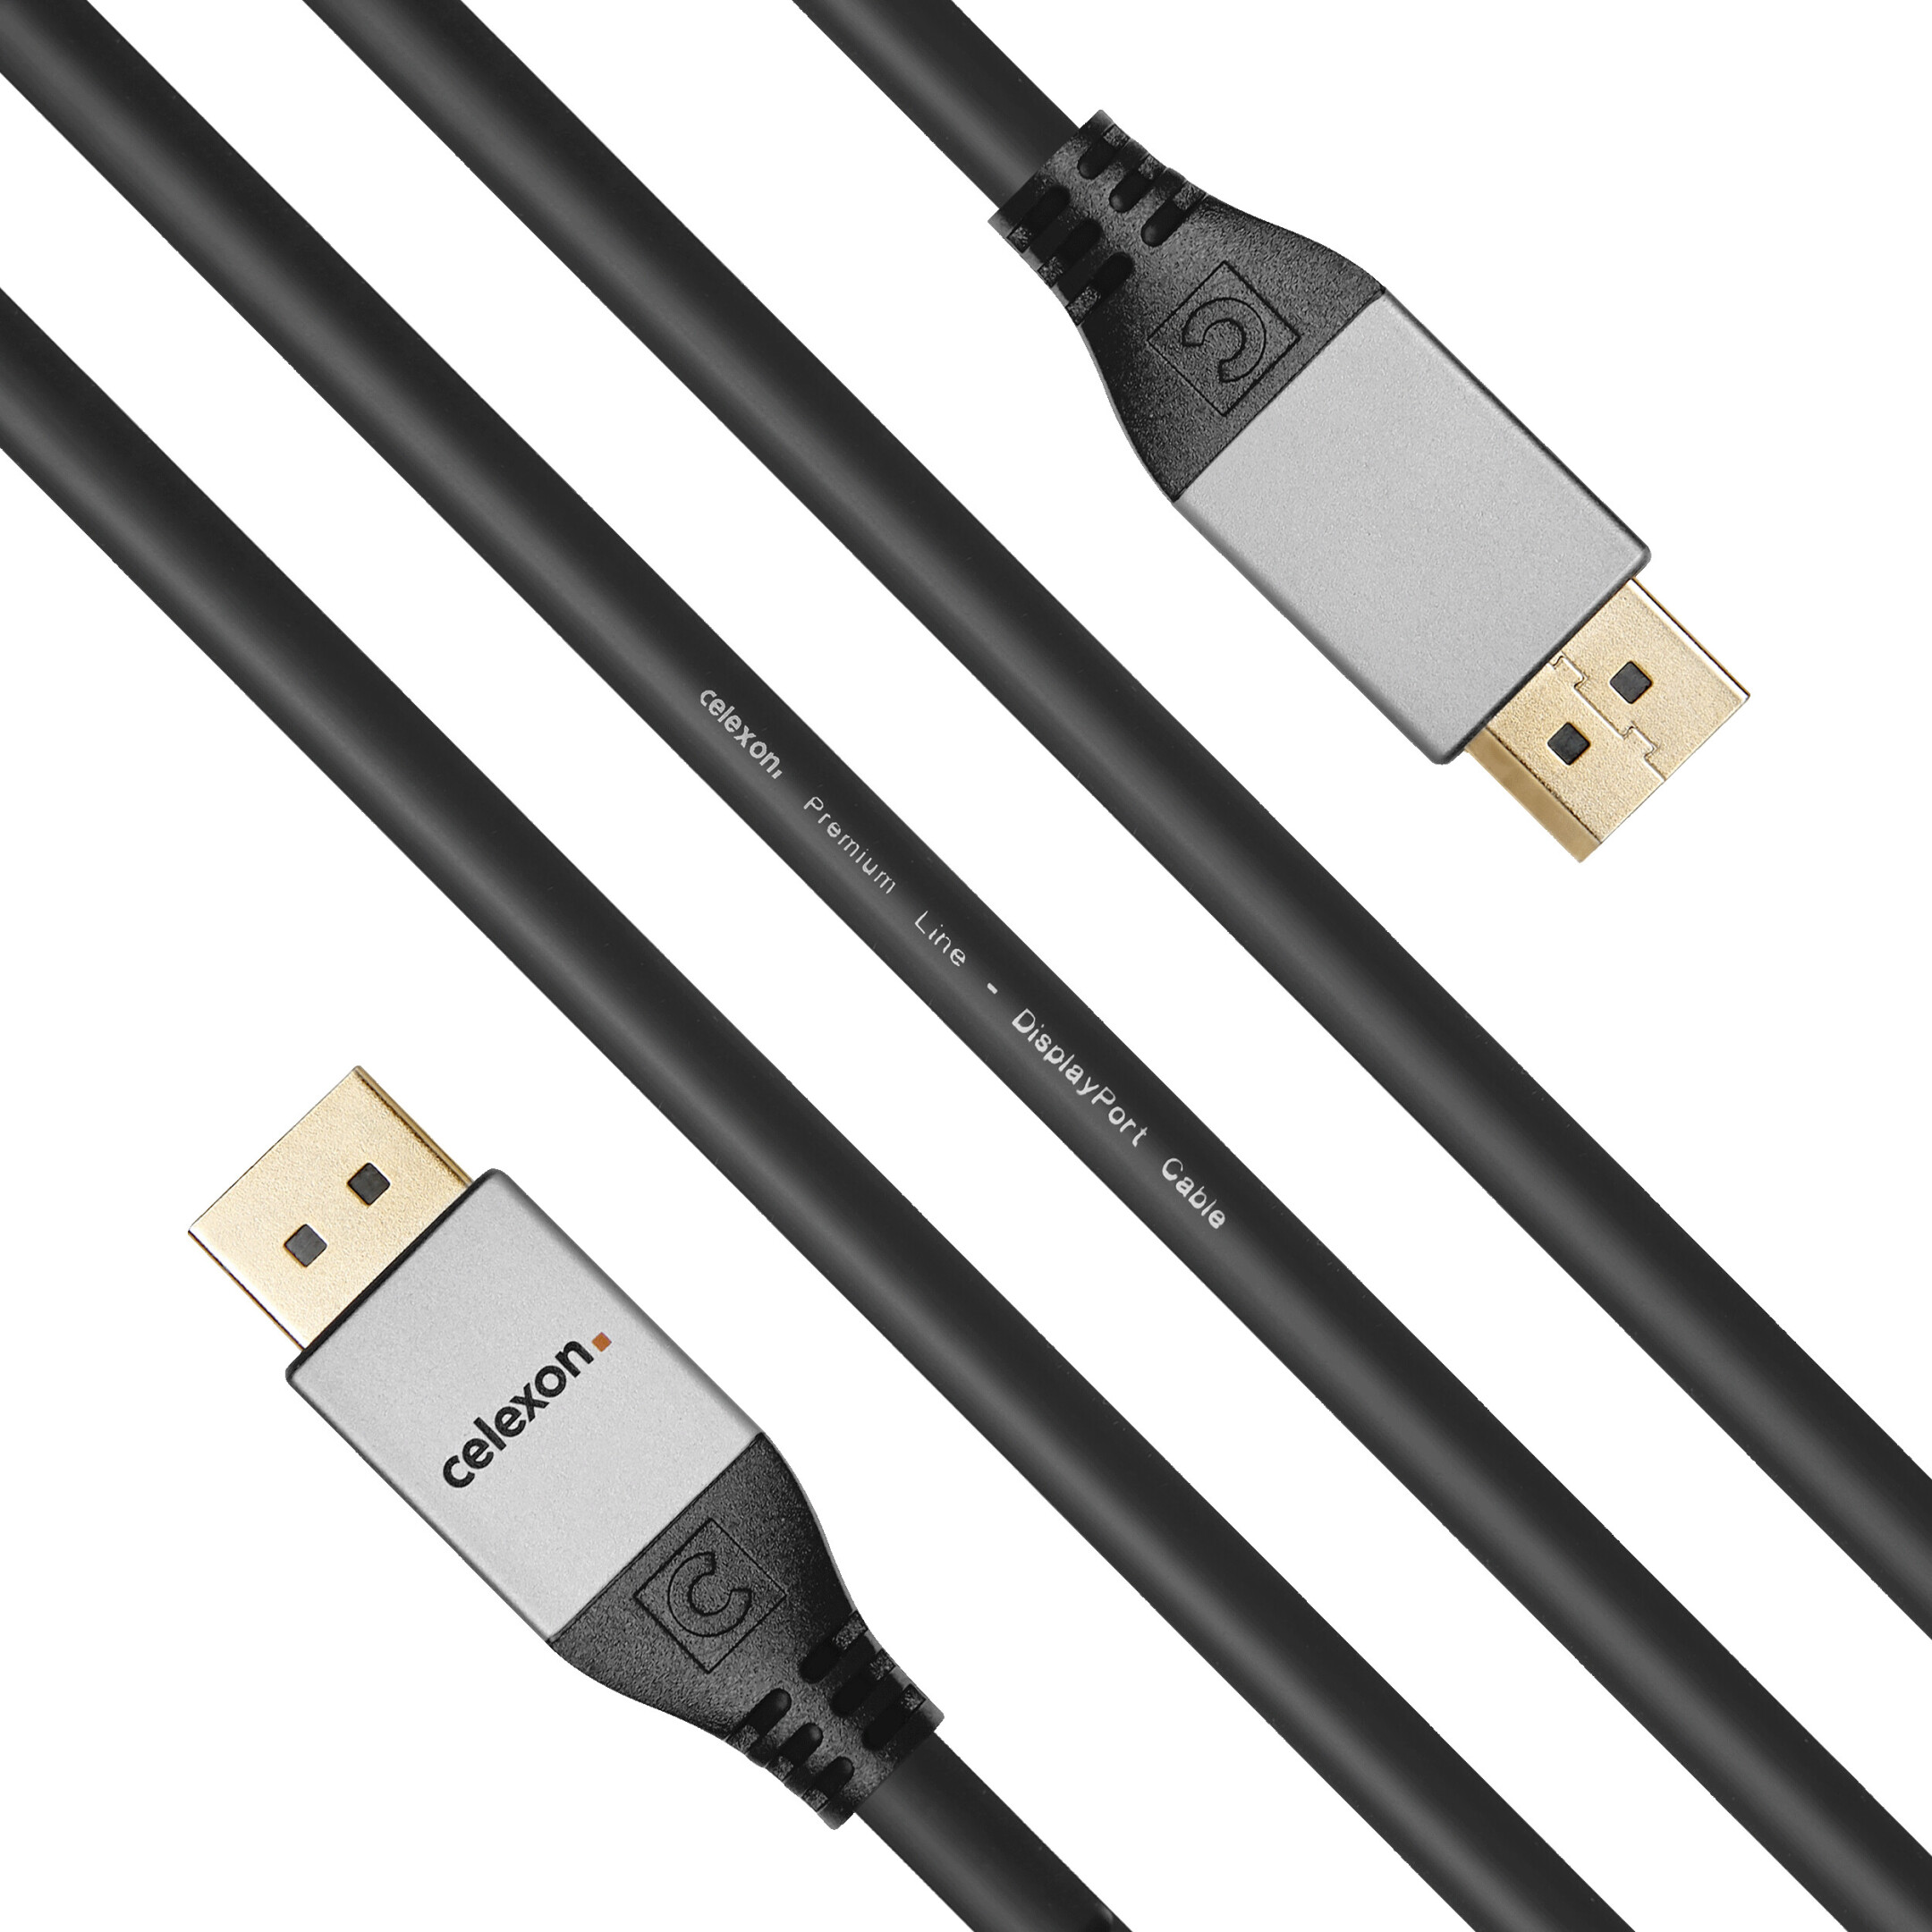 celexon-DisplayPort-Kabel-4K-5-0m-Professional